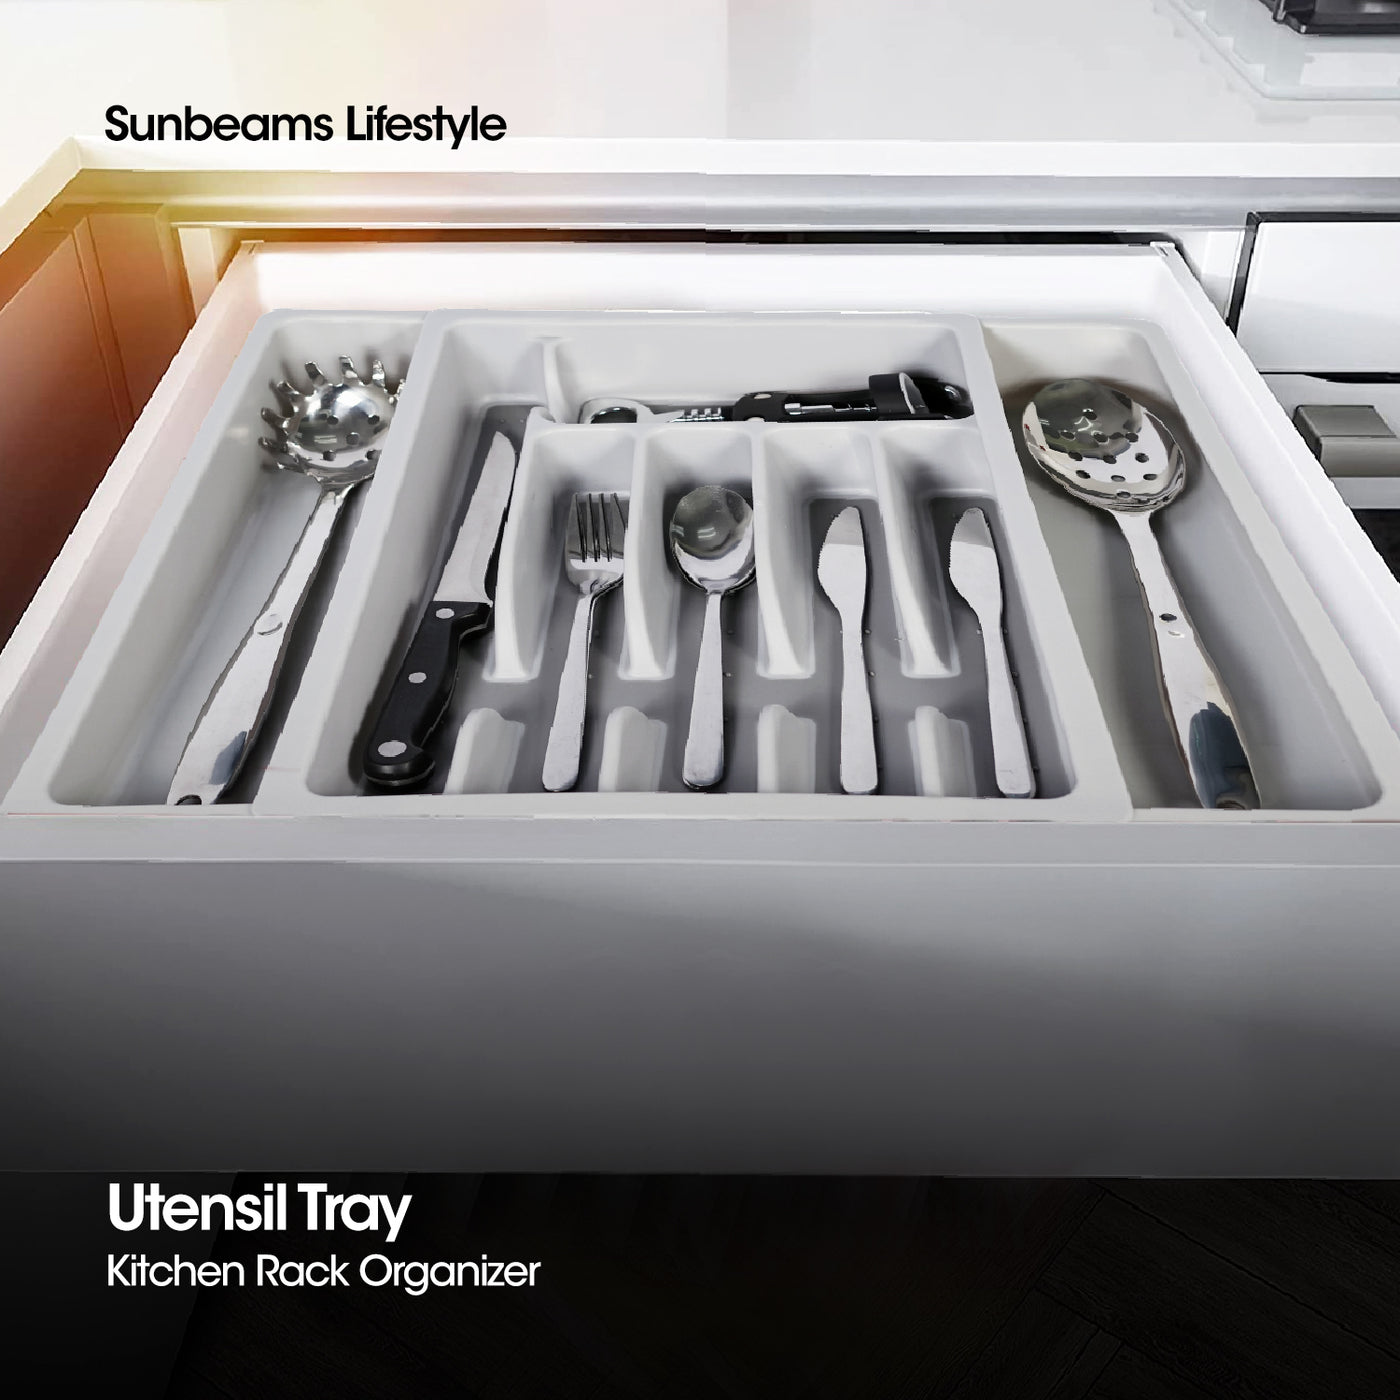 SLIQUE Premium Utensil Tray Drawer Organizer 48x38.8x6.5cm Kitchen Essential Amazing Gift Idea For Any Occasion!